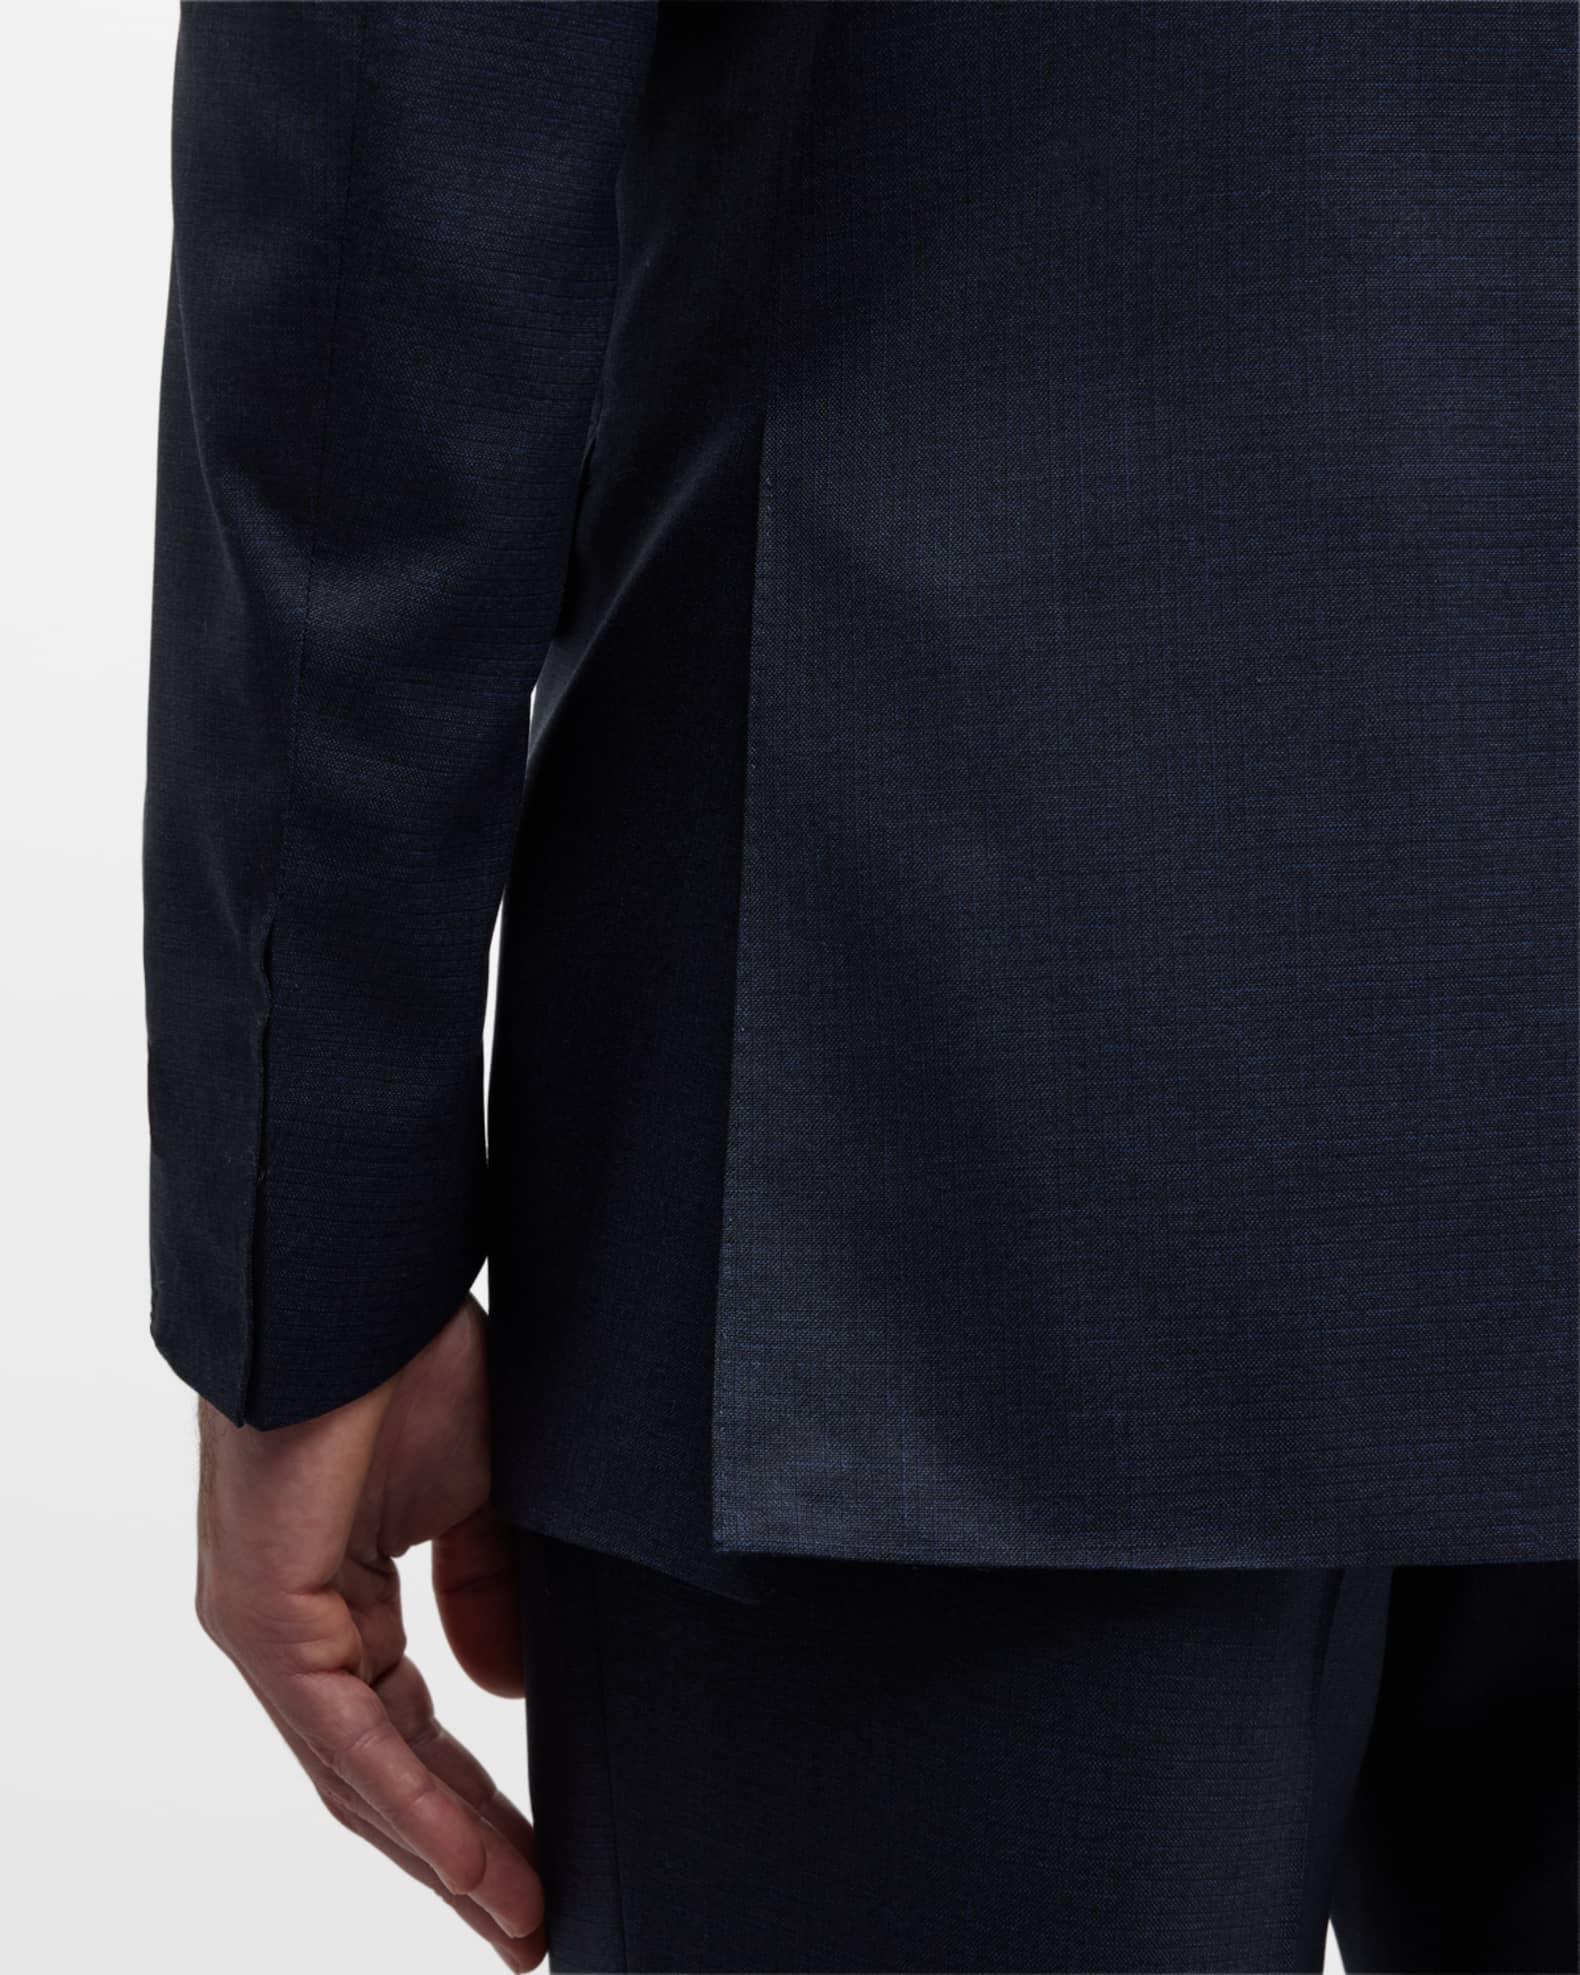 Canali Men's Tonal Check Wool Suit | Neiman Marcus